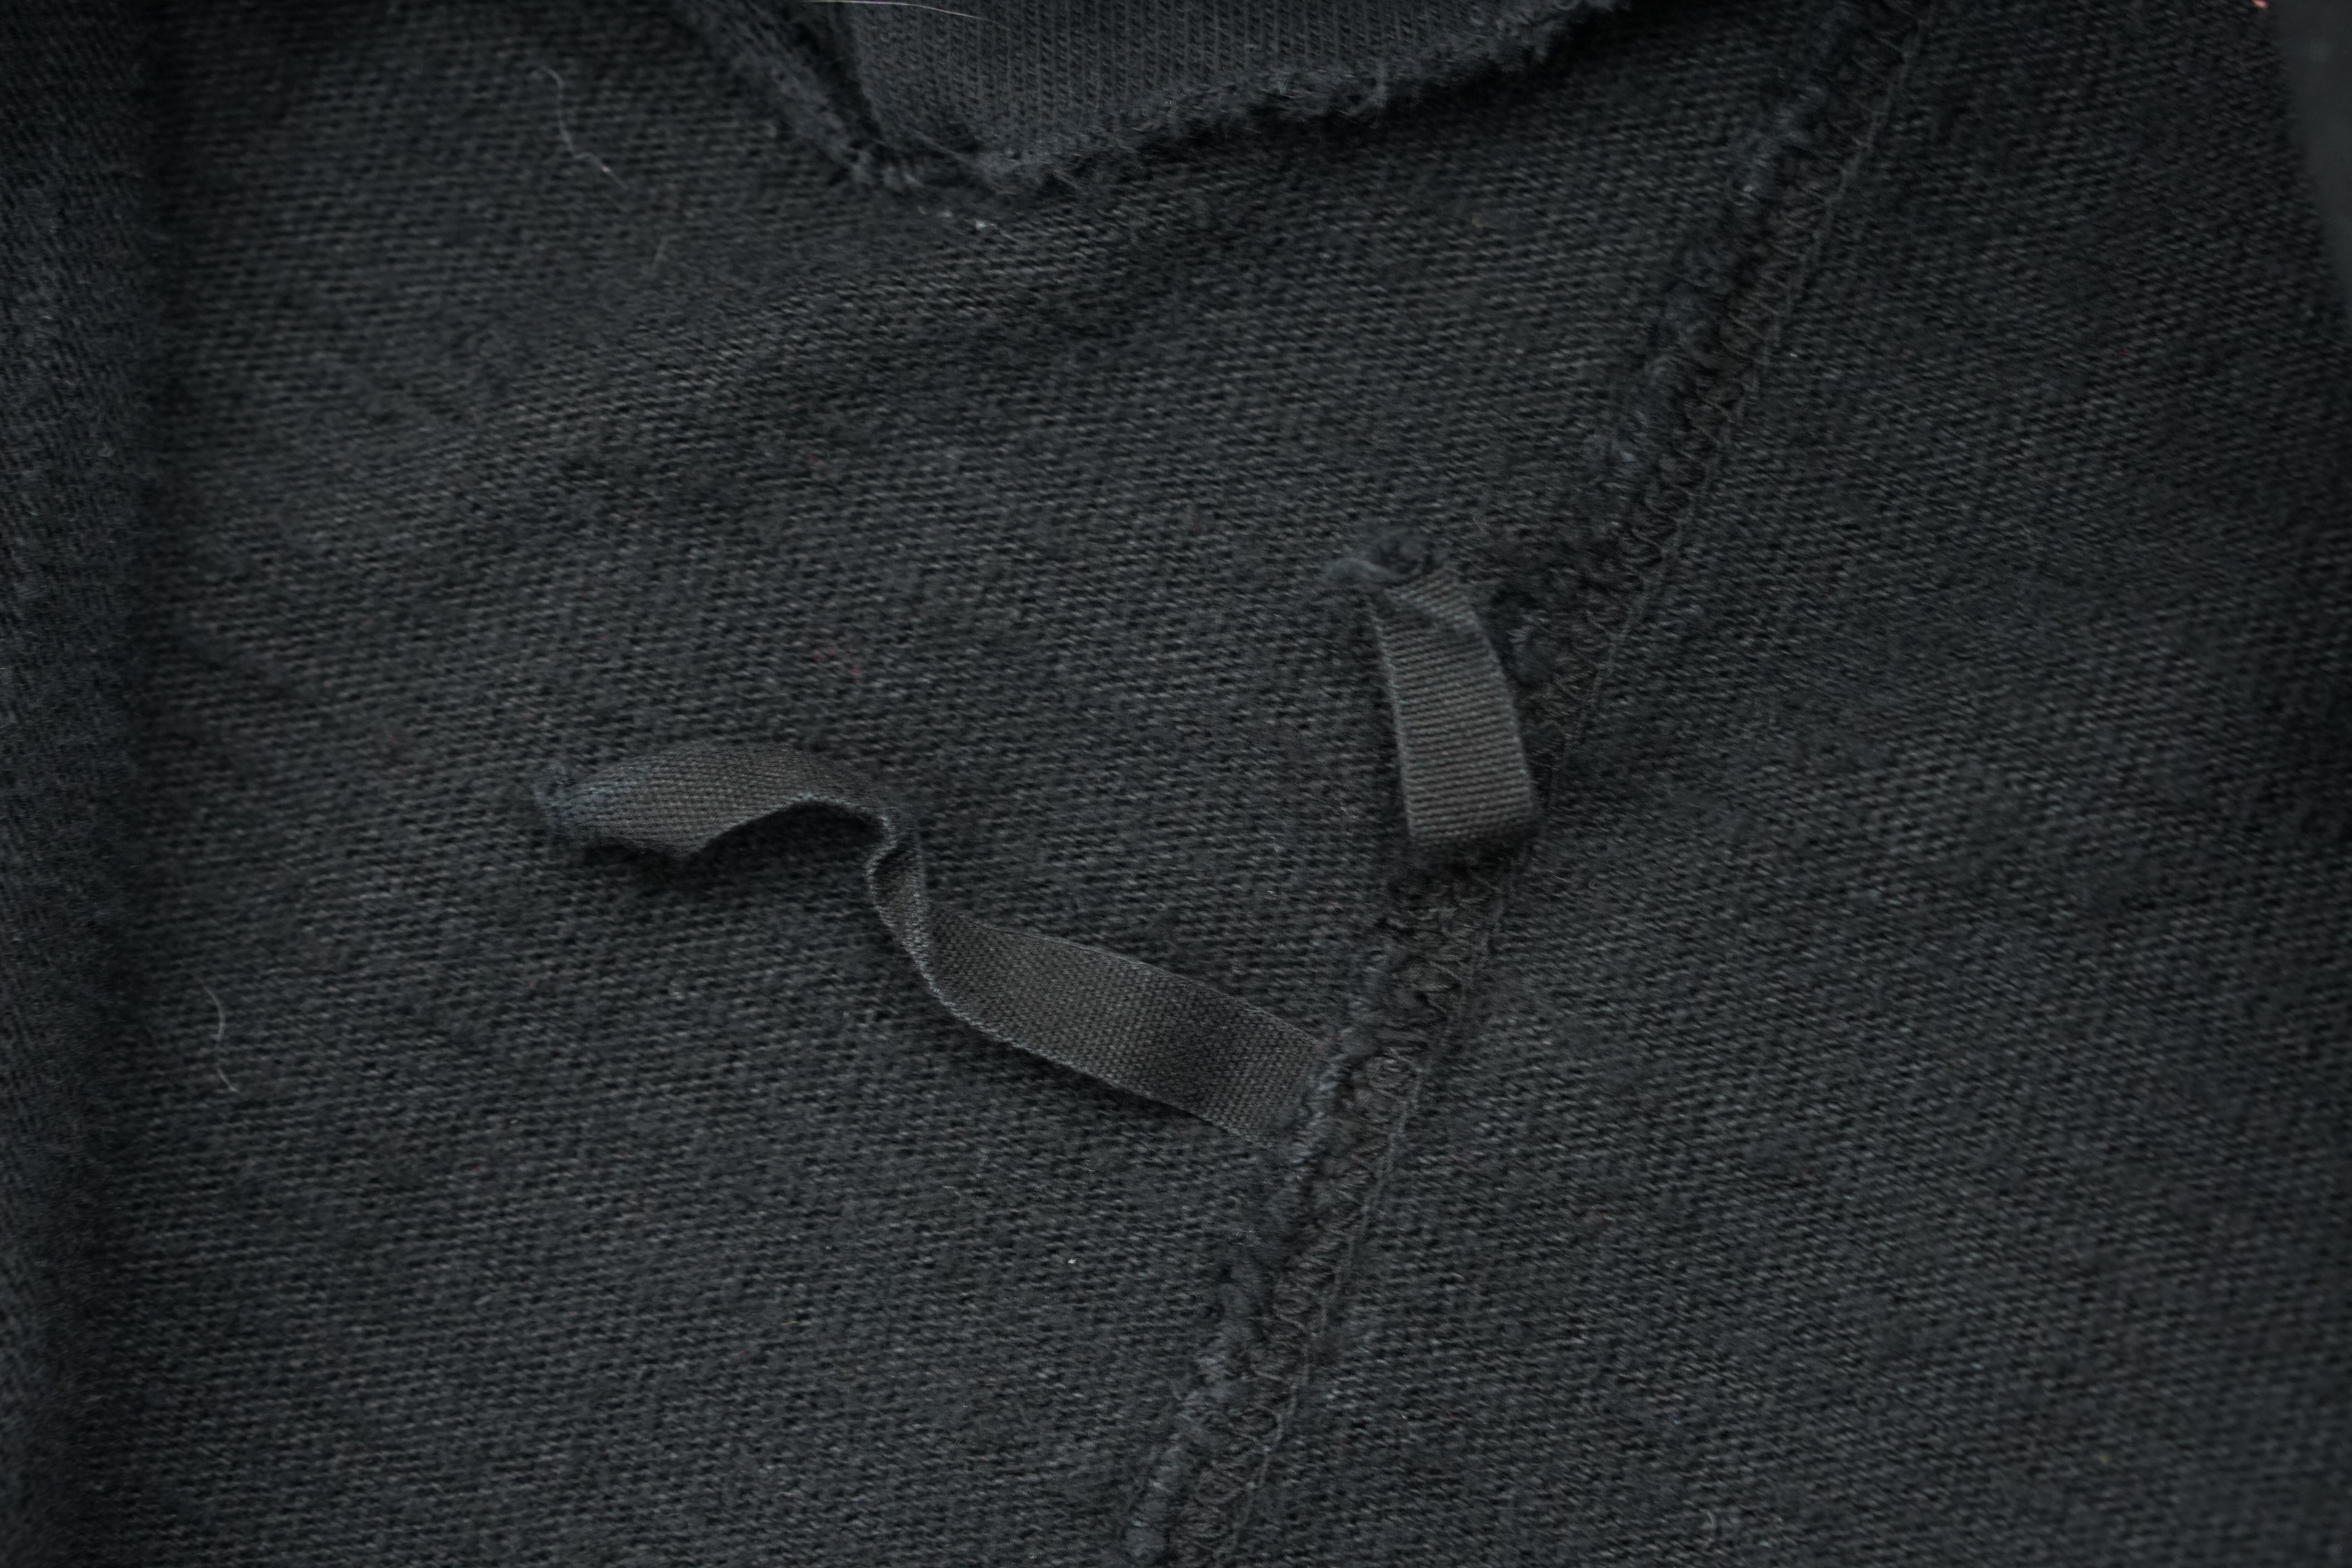 DRKSHDW Pull Over Black Sweater Shirt Geometric Lines Layerd - 5